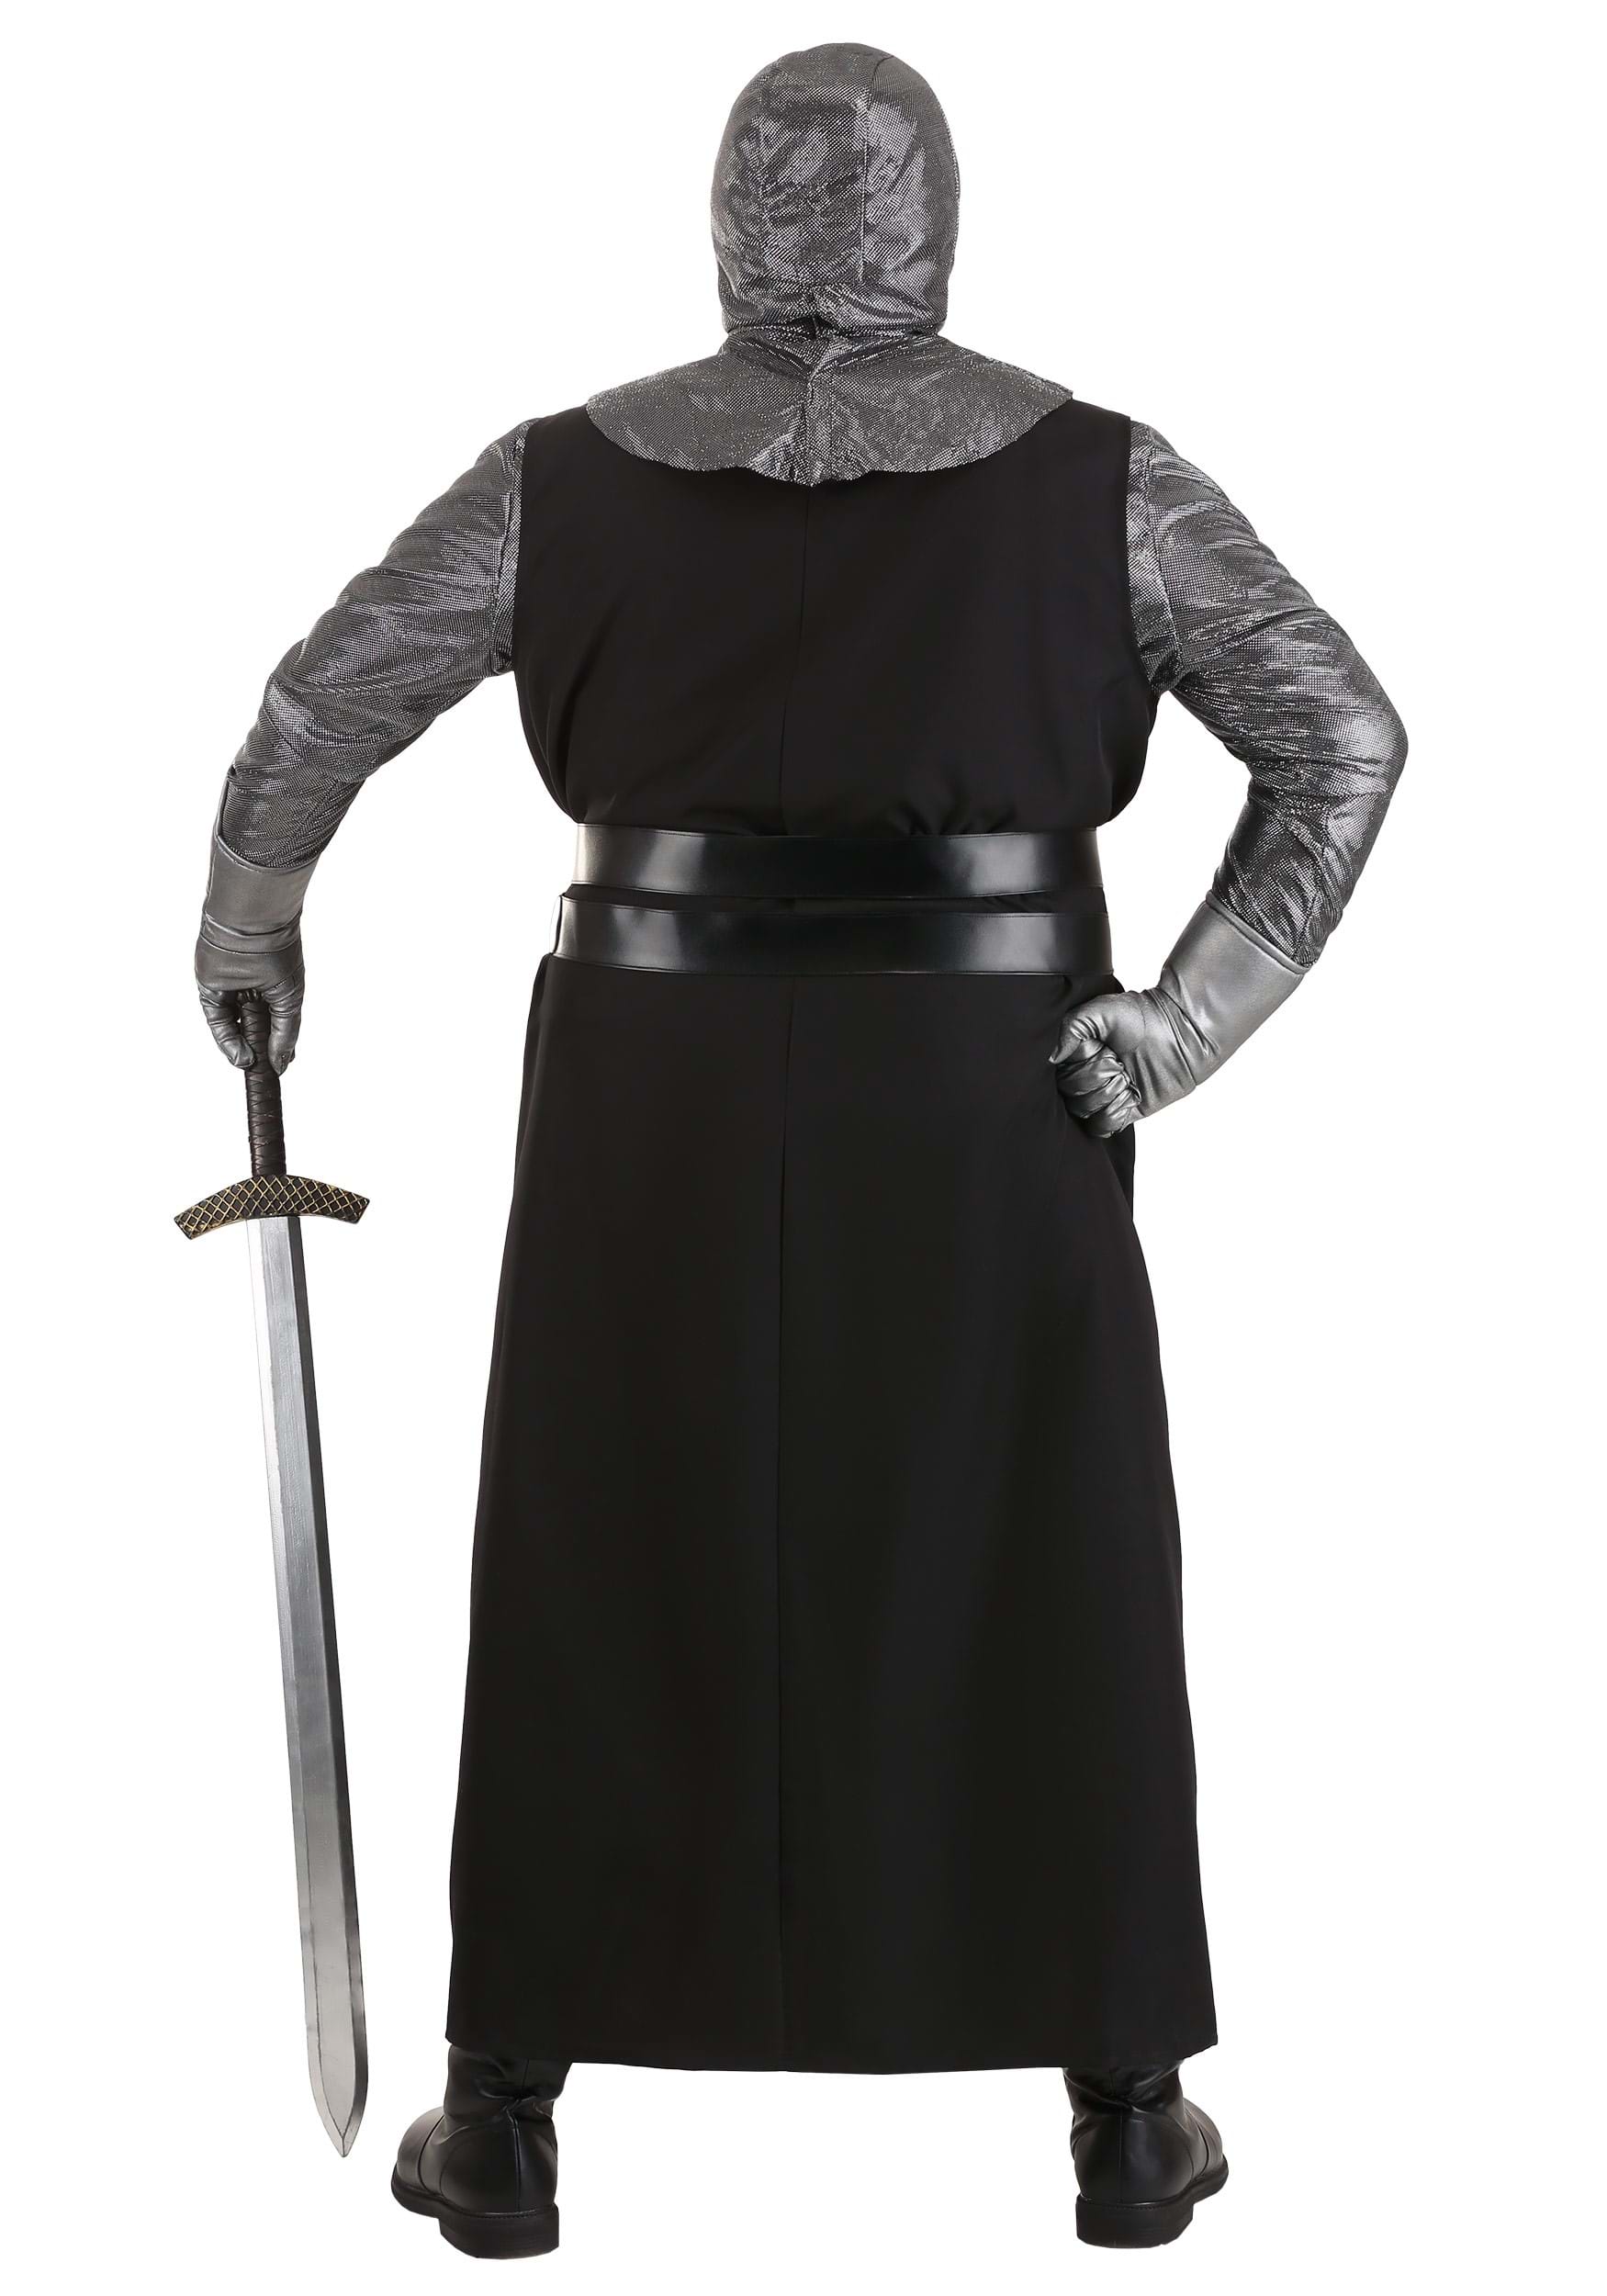 Plus Size Men's Dark Crusader Fancy Dress Costume